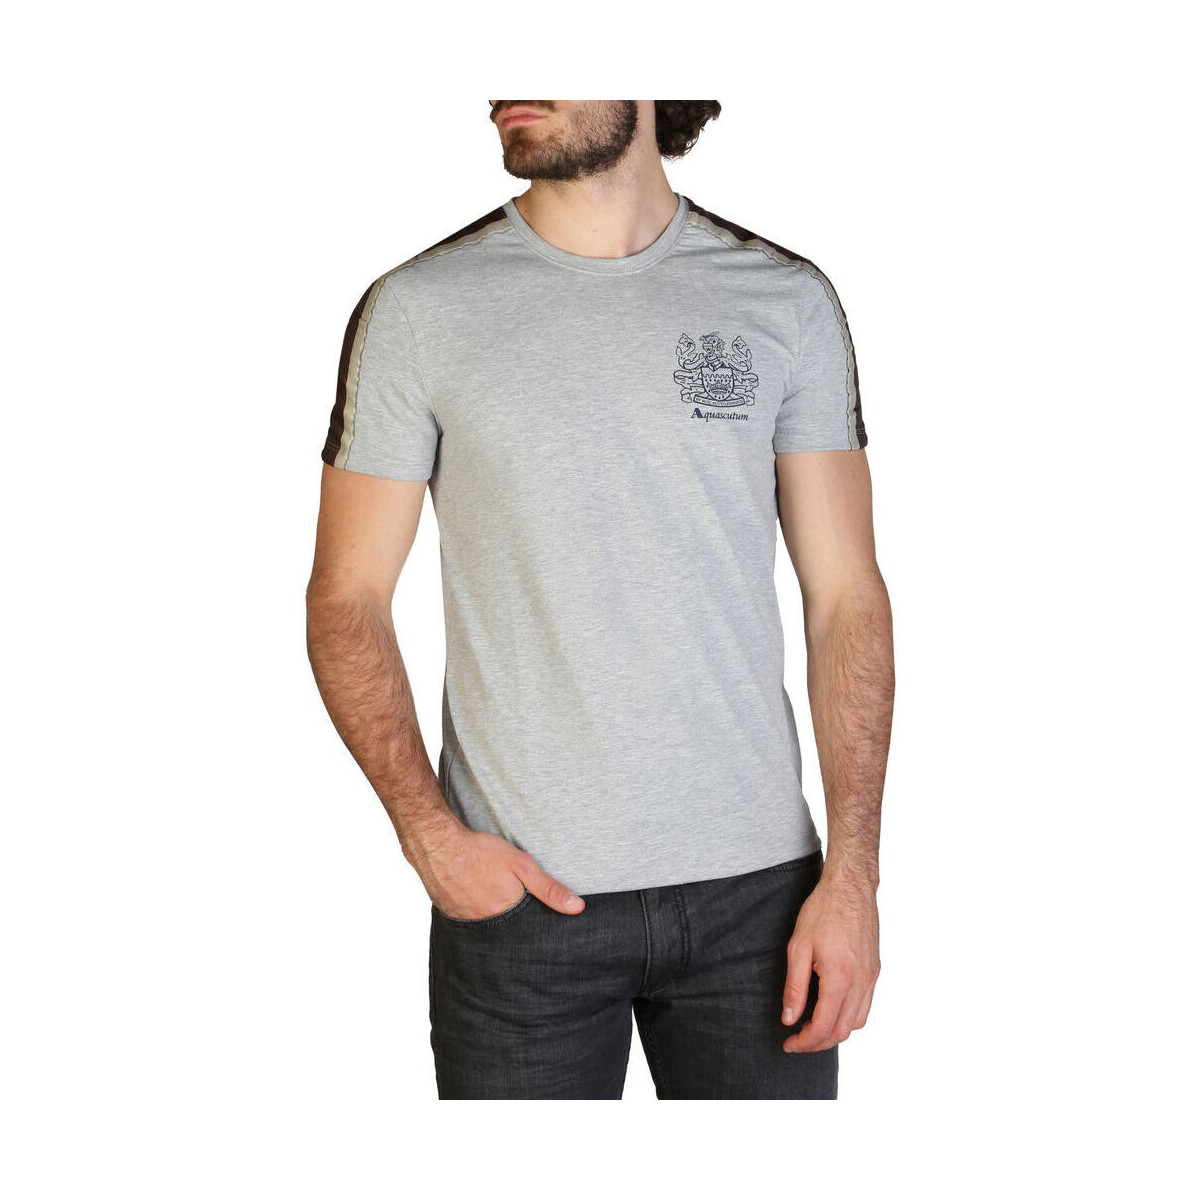 textil Herr T-shirts Aquascutum - qmt017m0 Grå